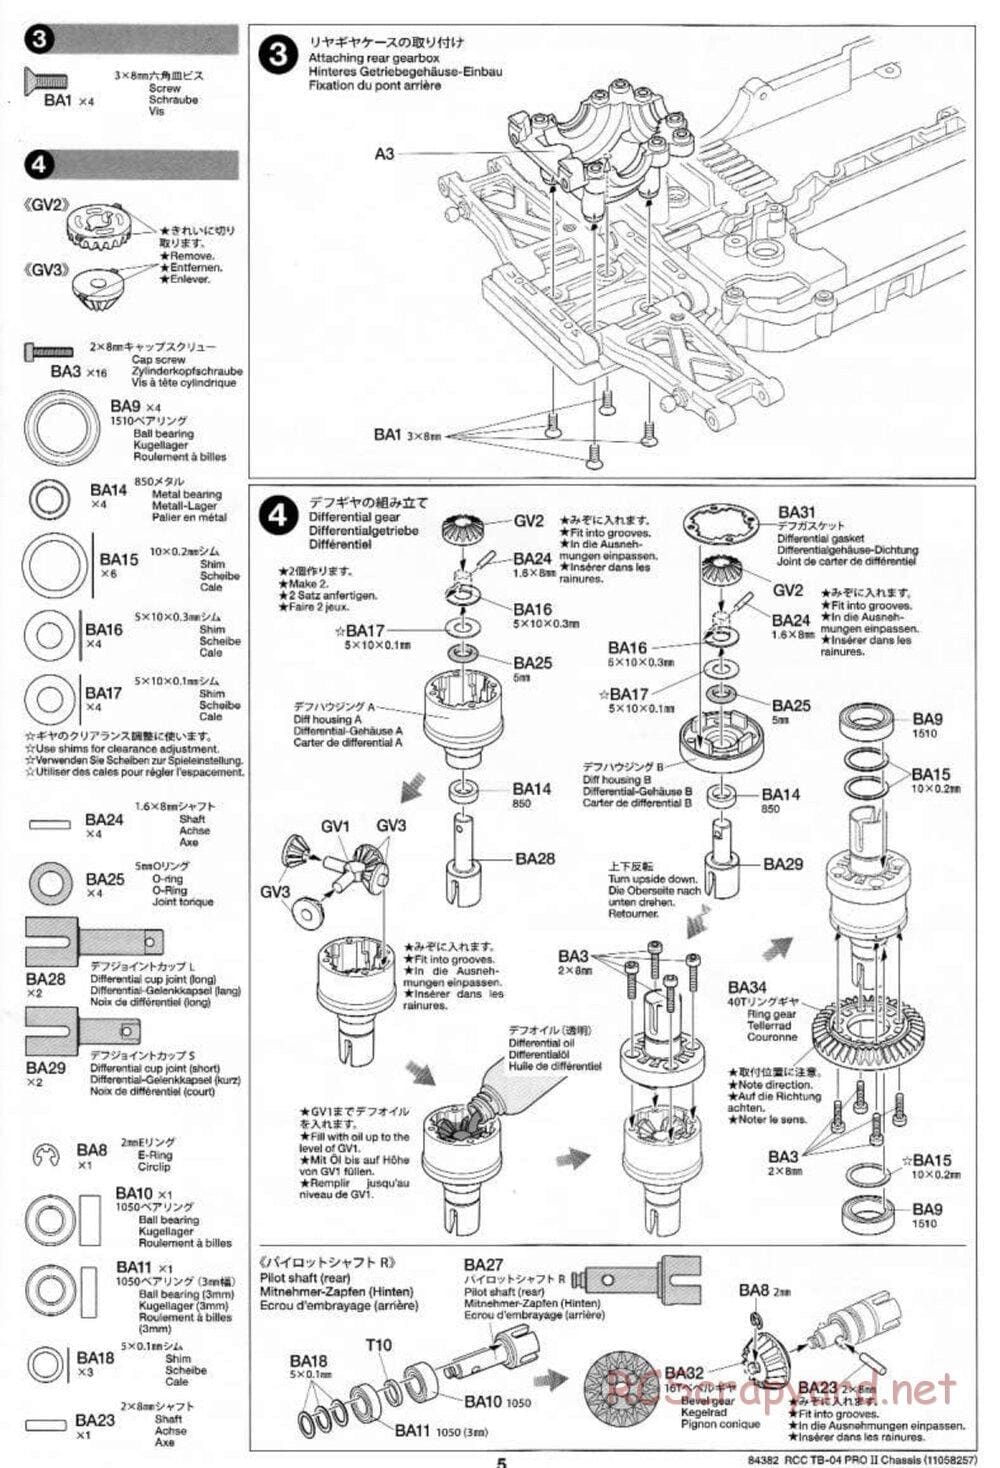 Tamiya - TB-04 Pro II Chassis - Manual - Page 5